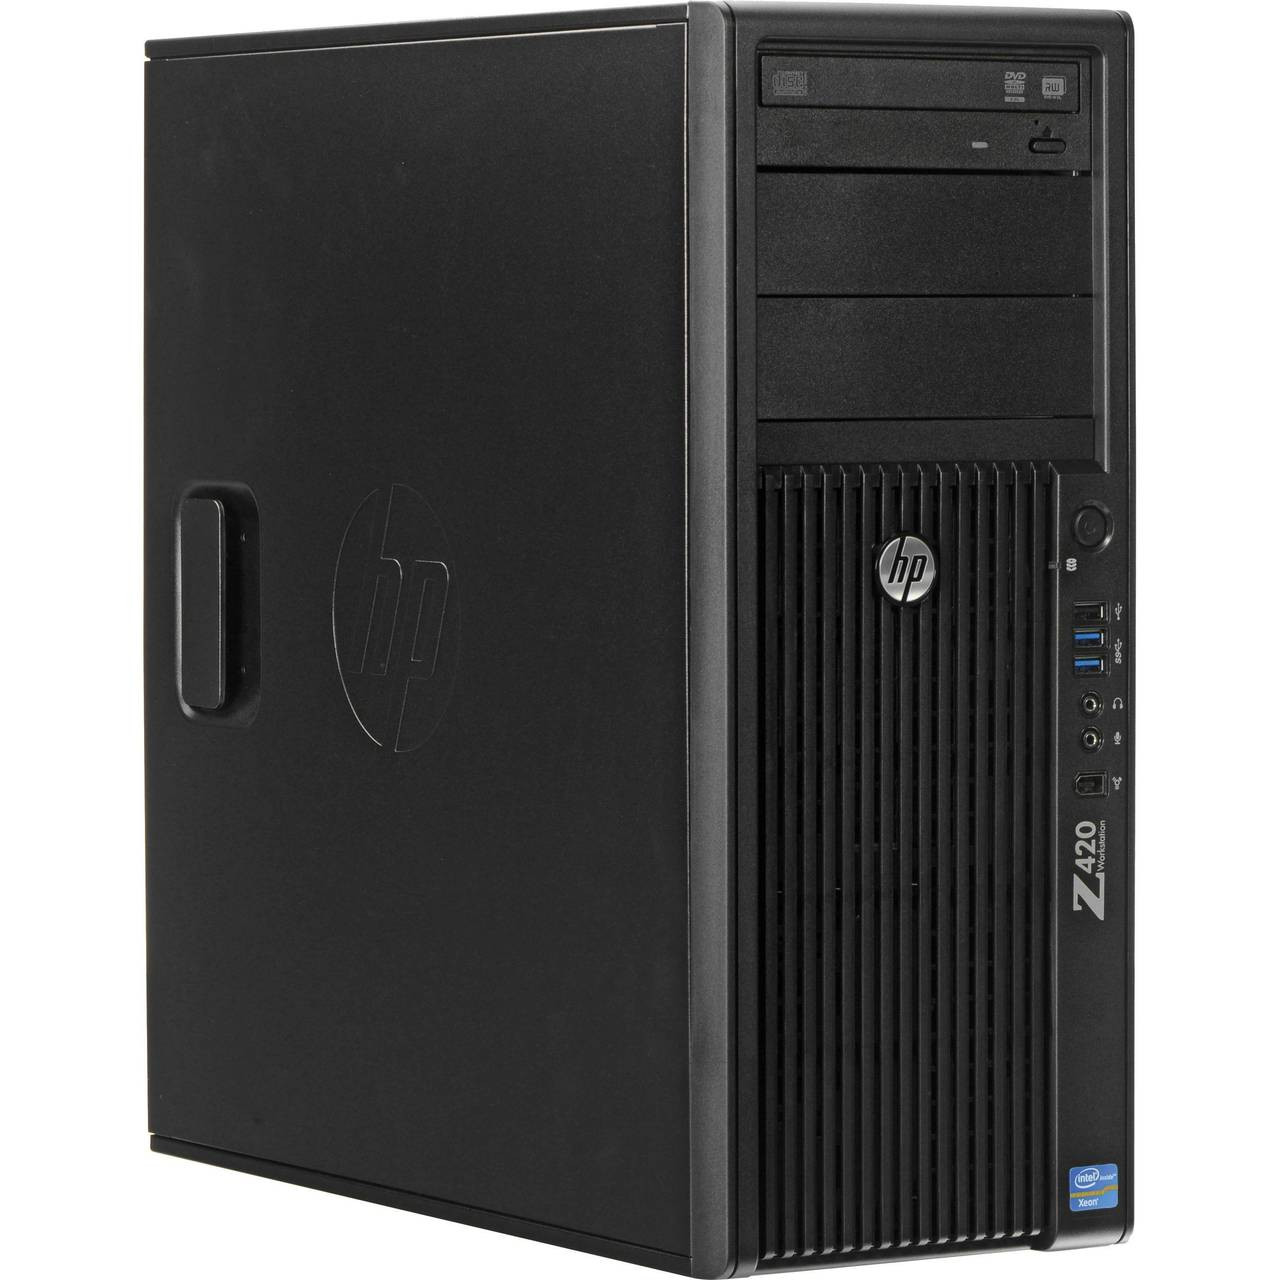 HP Workstation Z420 Tower Quad Core Intel Xeon 3.6GHz, 8GB Ram, 500GB HDD, DVD-RW, Windows 10 Pro 64 Desktop Computer